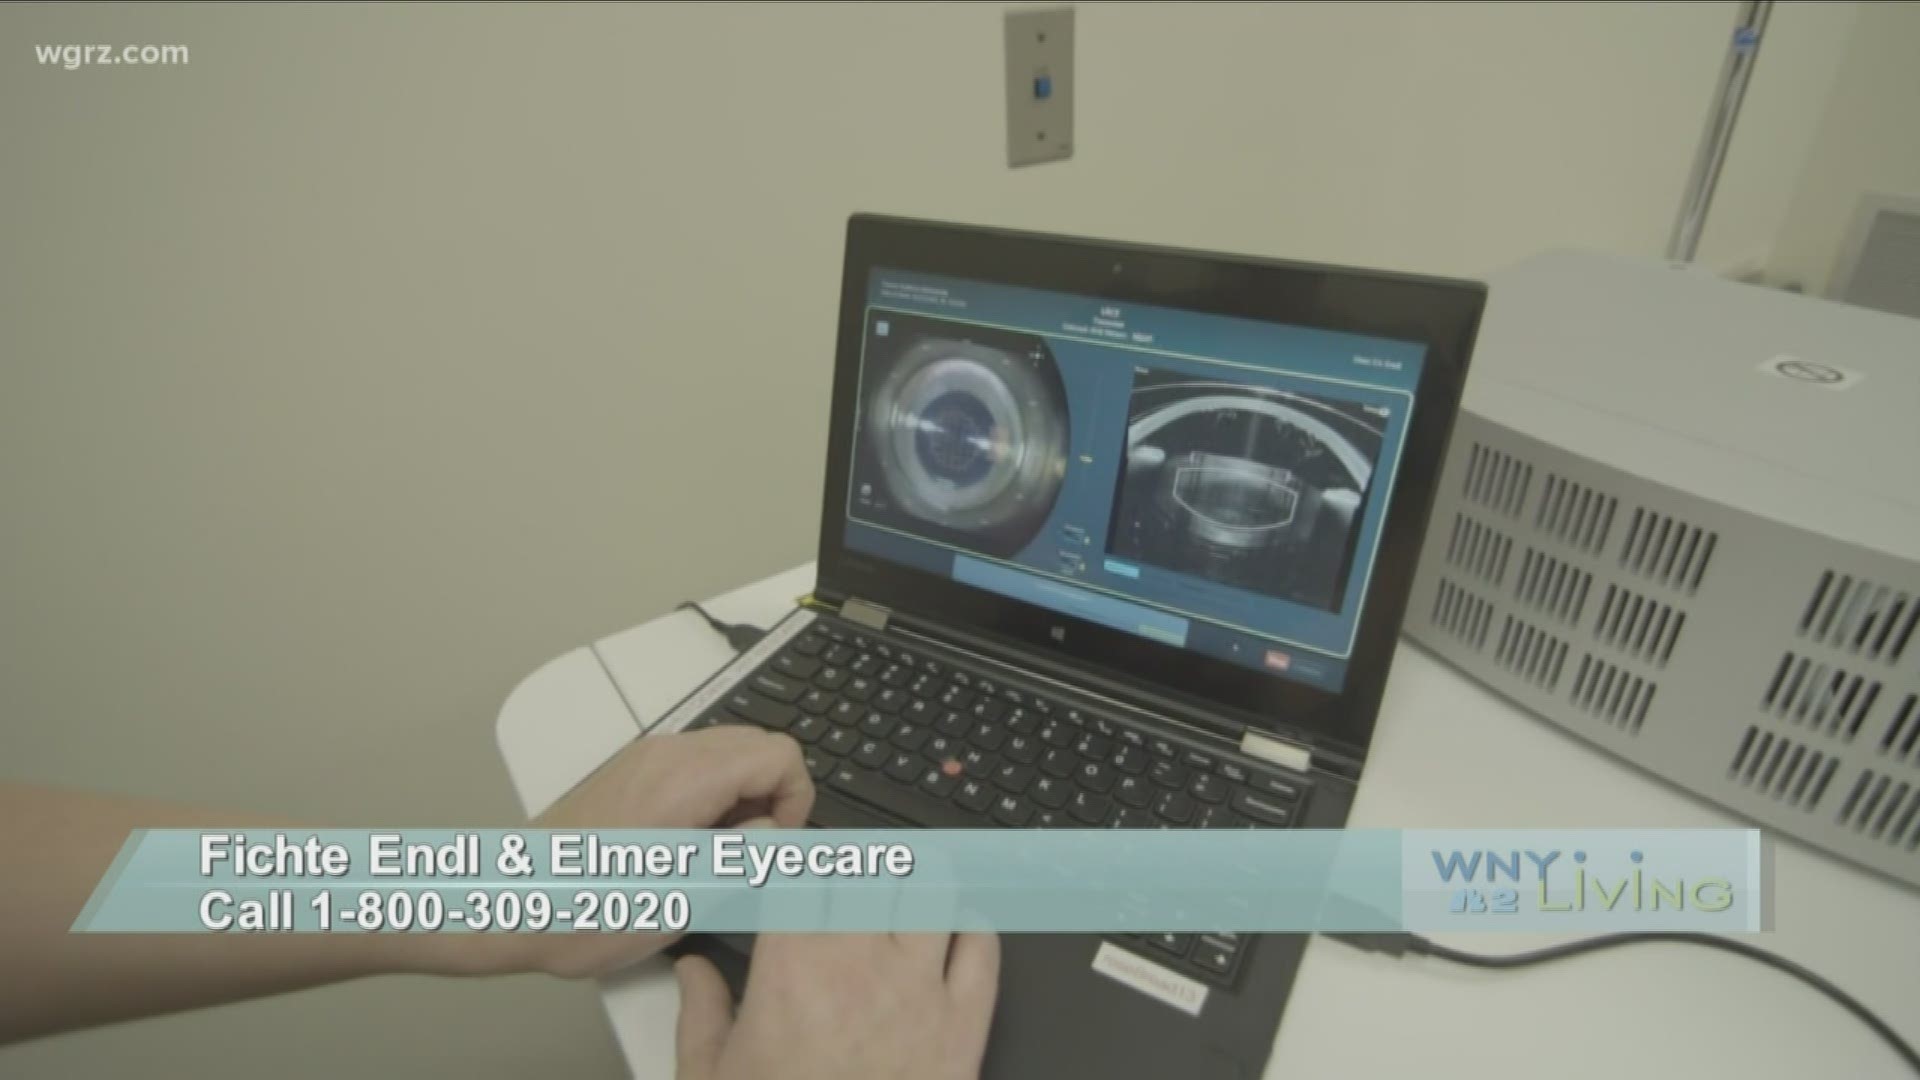 August 24 - Fichte Endle & Elmer Eyecare